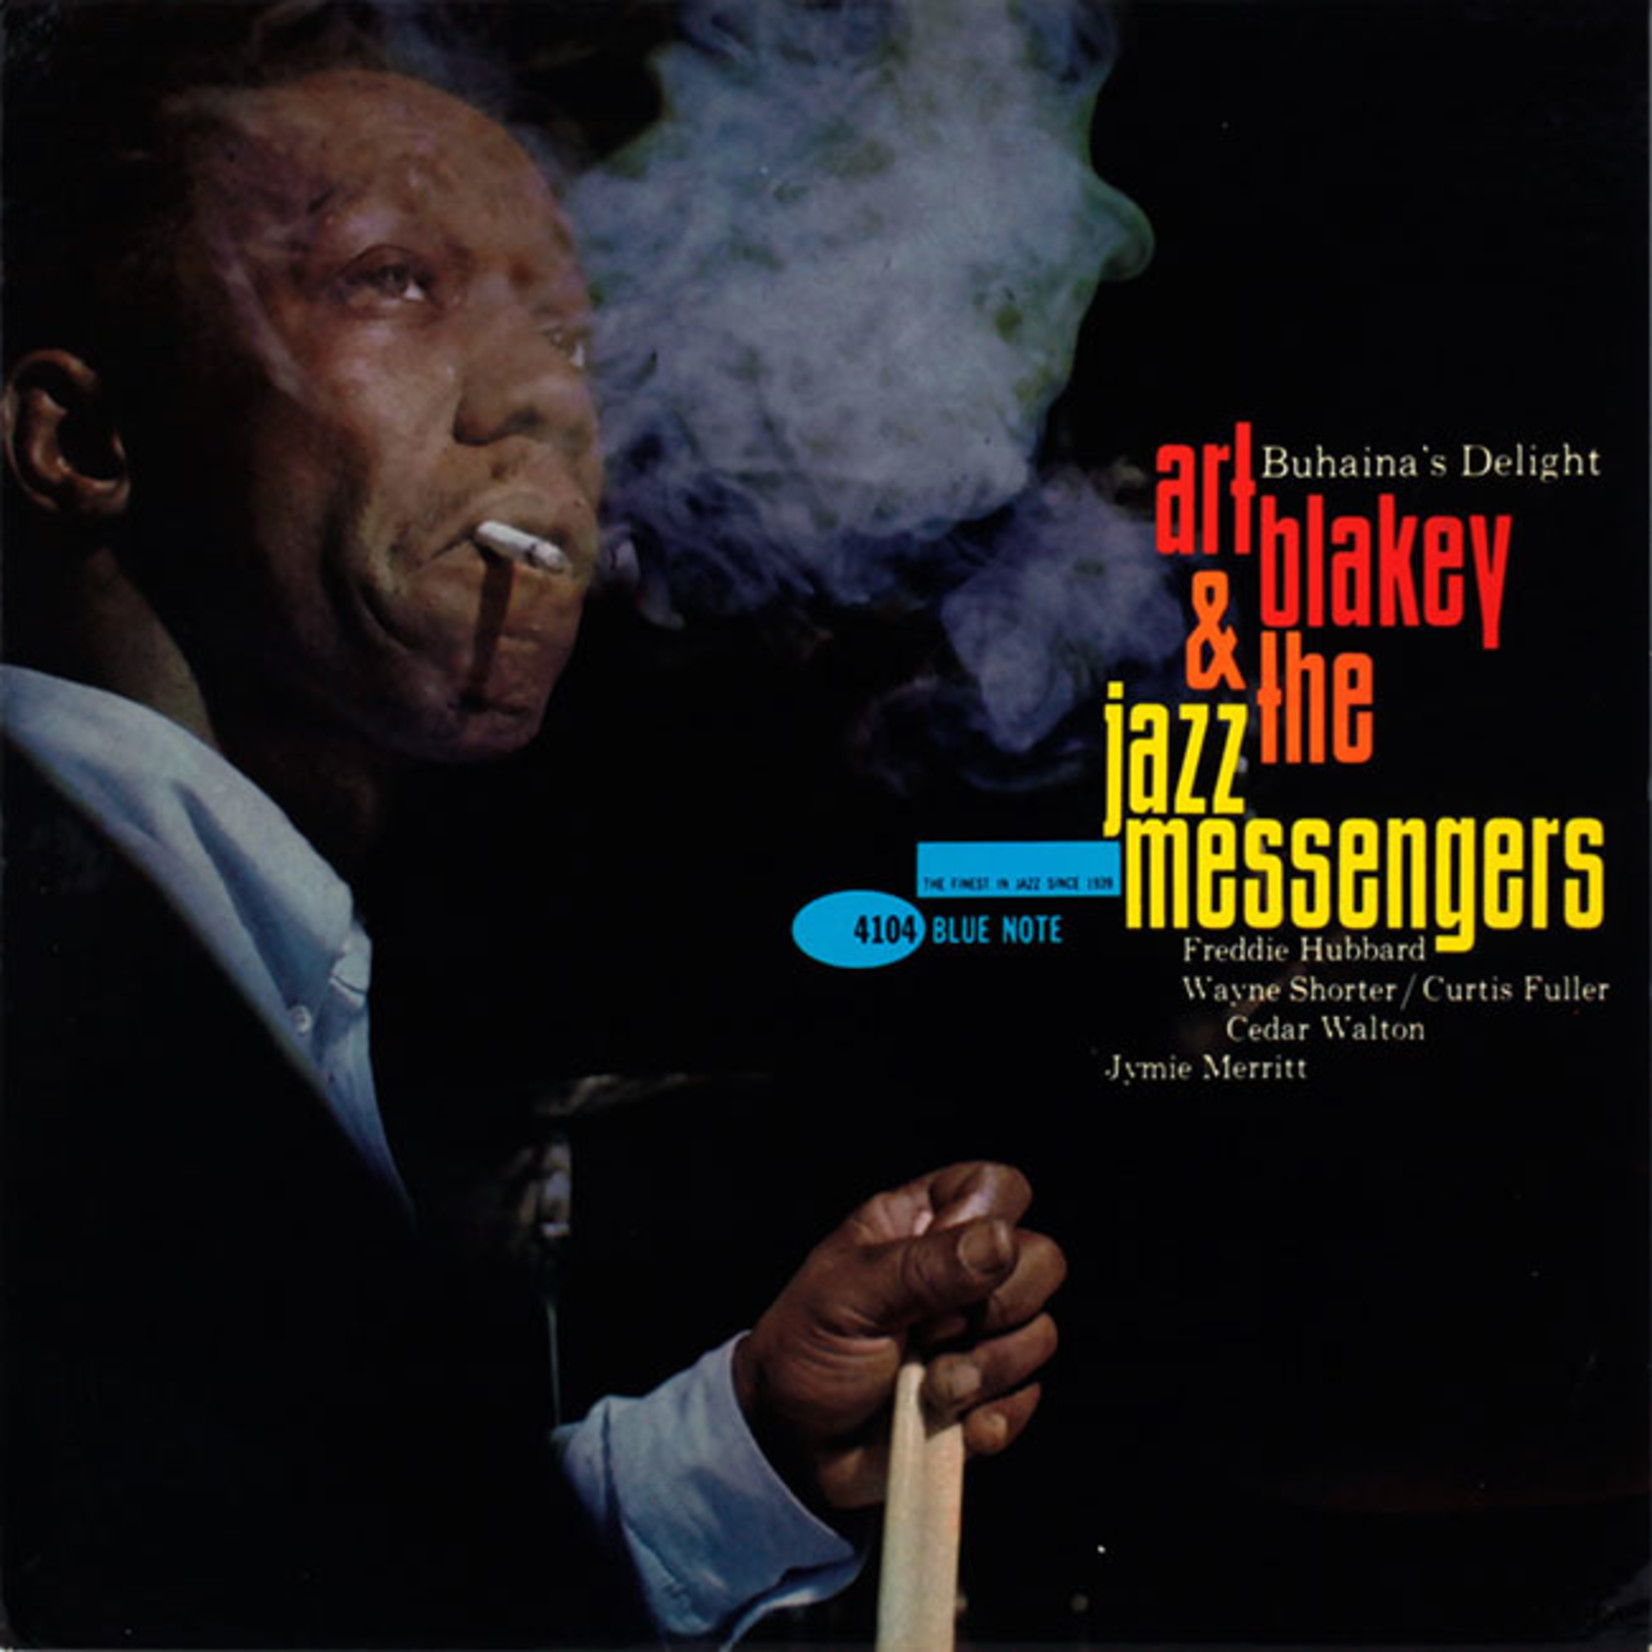 [New] Art Blakey & His Jazz Messengers - Buhaina's Delight (Blue Note 80 Series)